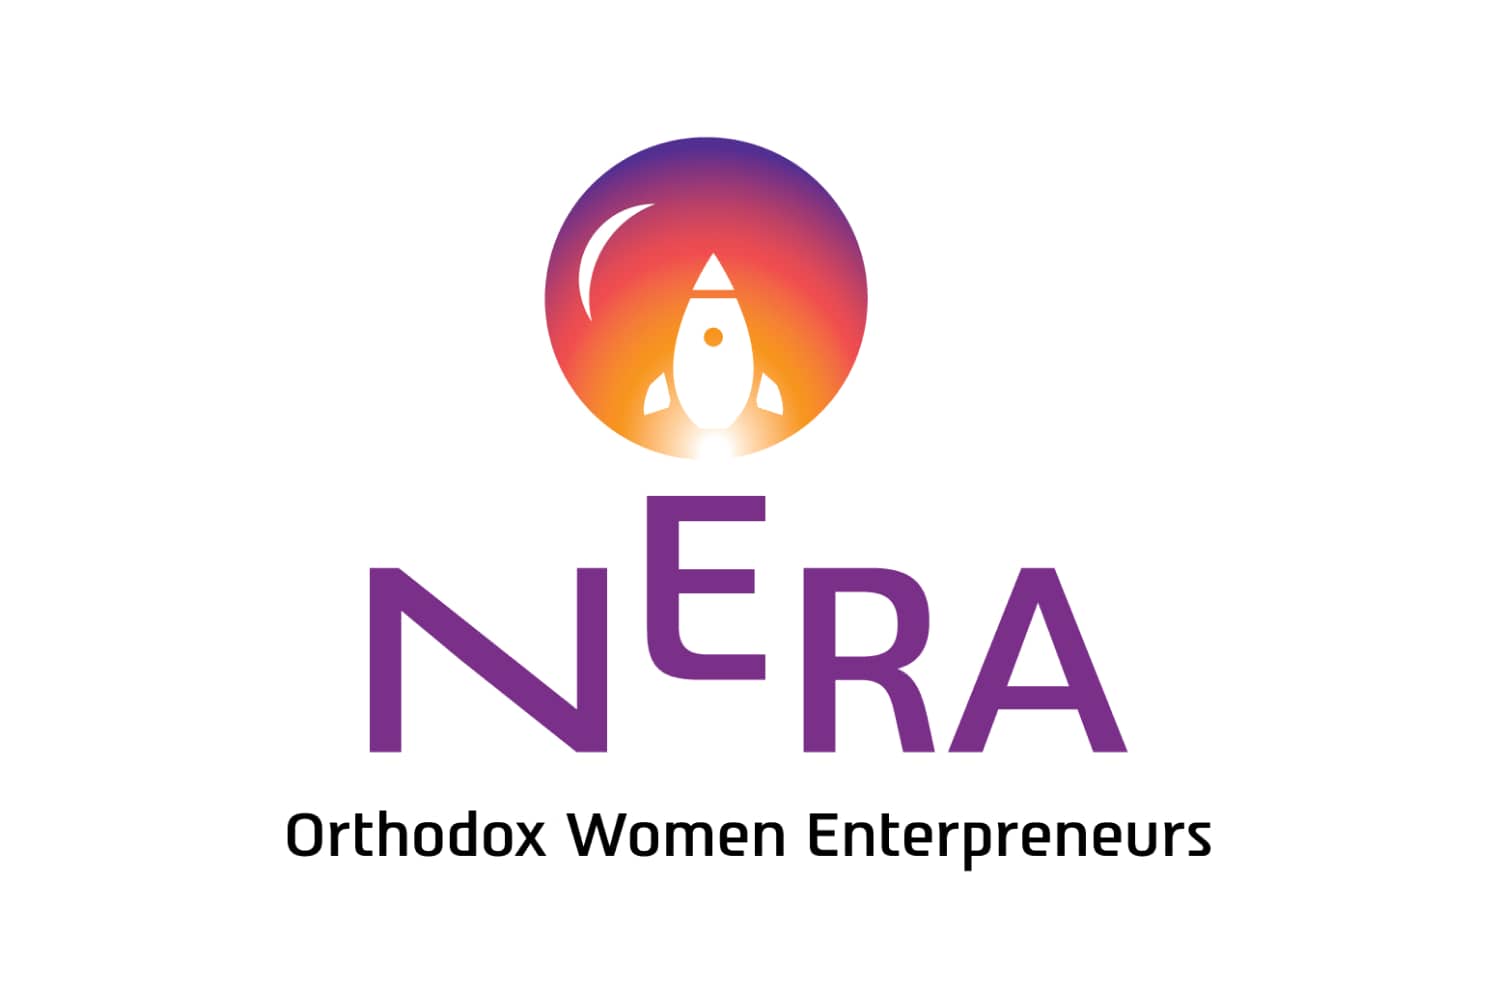 NERA - Orthodox Women Entrepreneurs logo